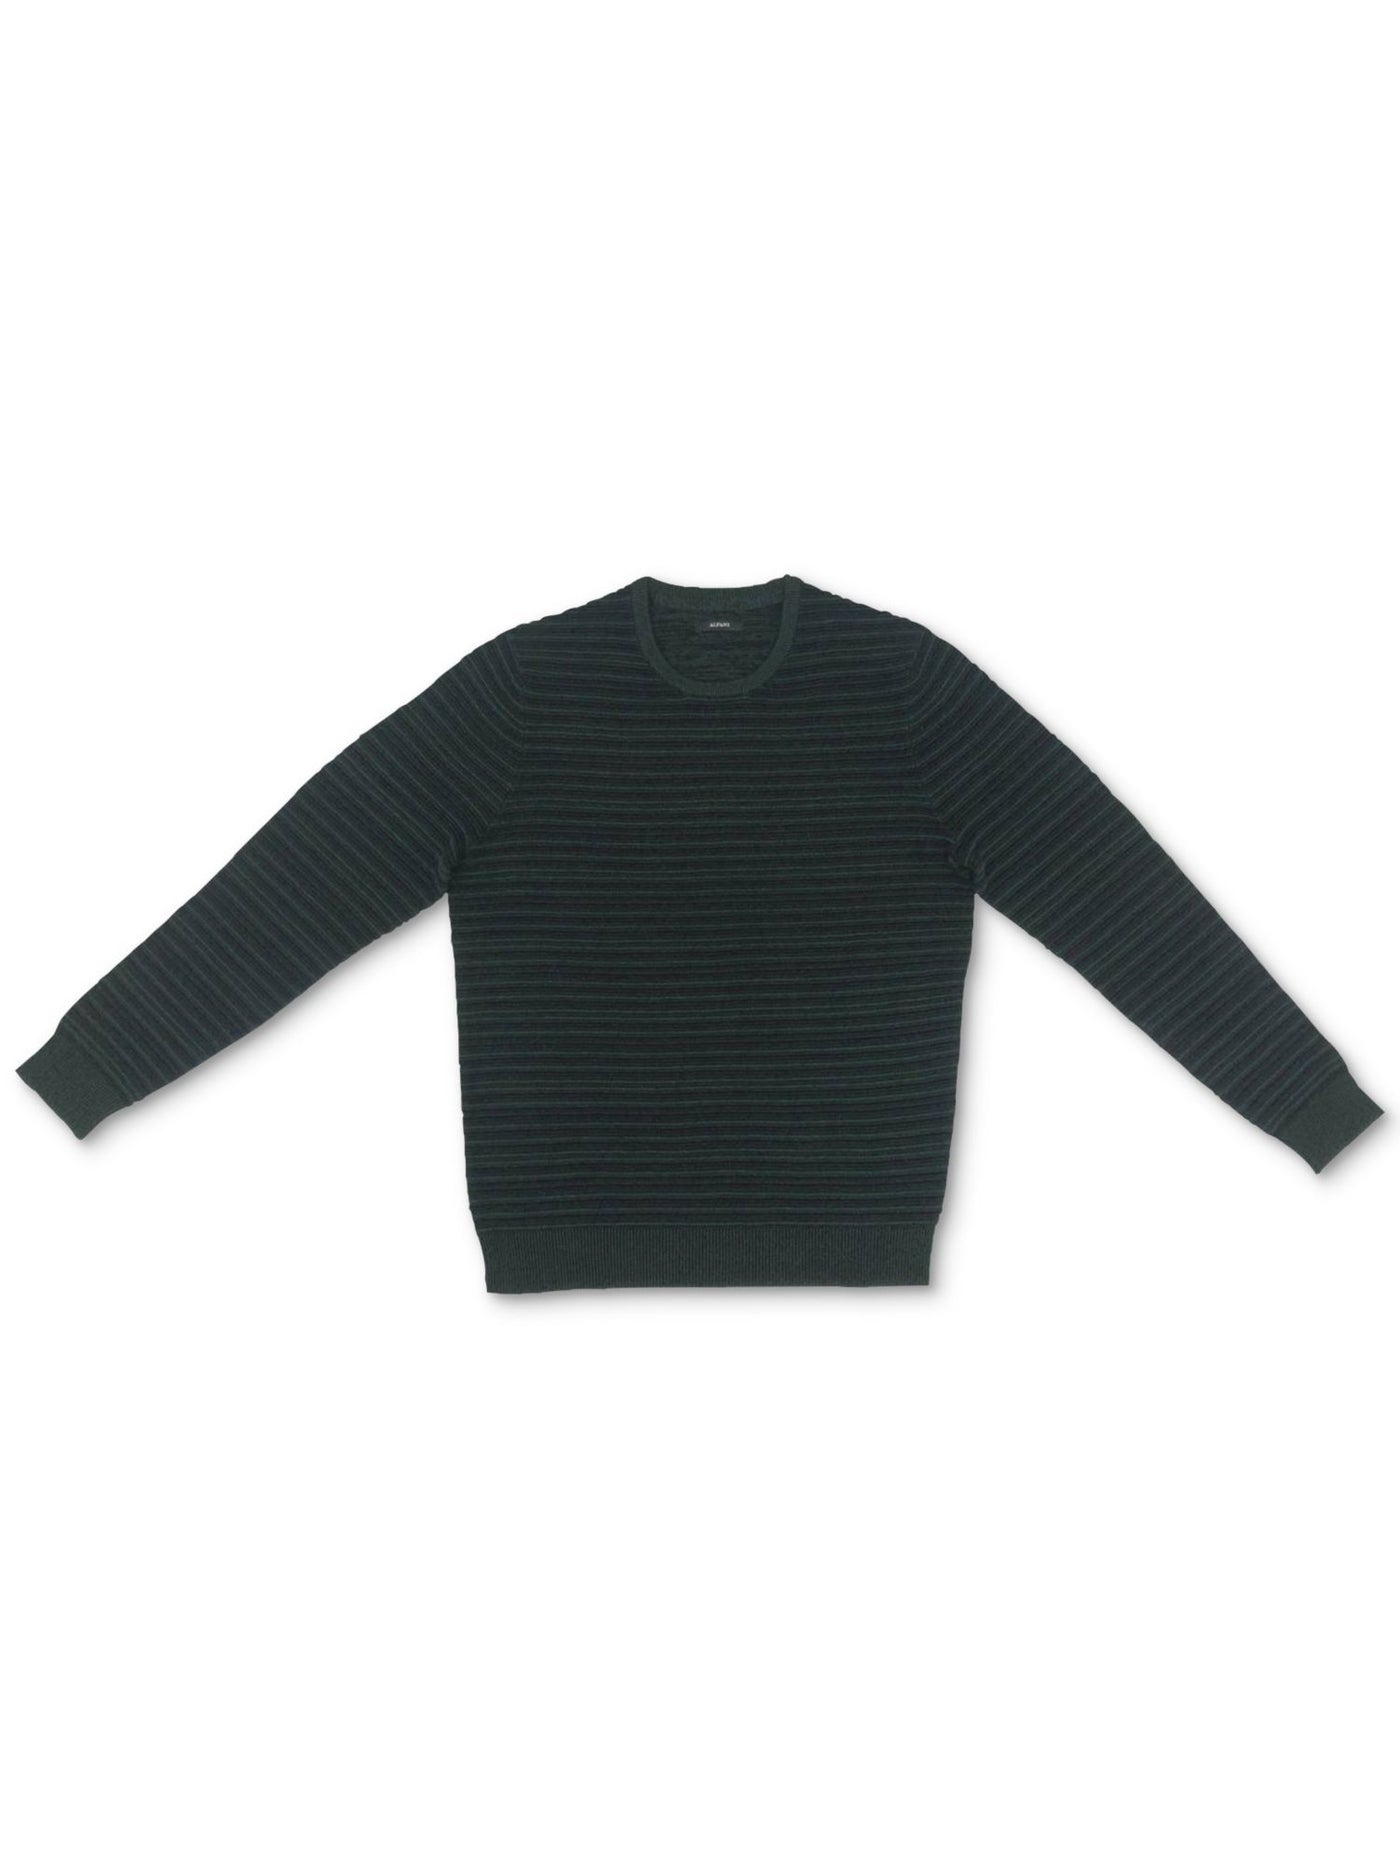 ALFANI Mens Green Heather Pullover Sweater L